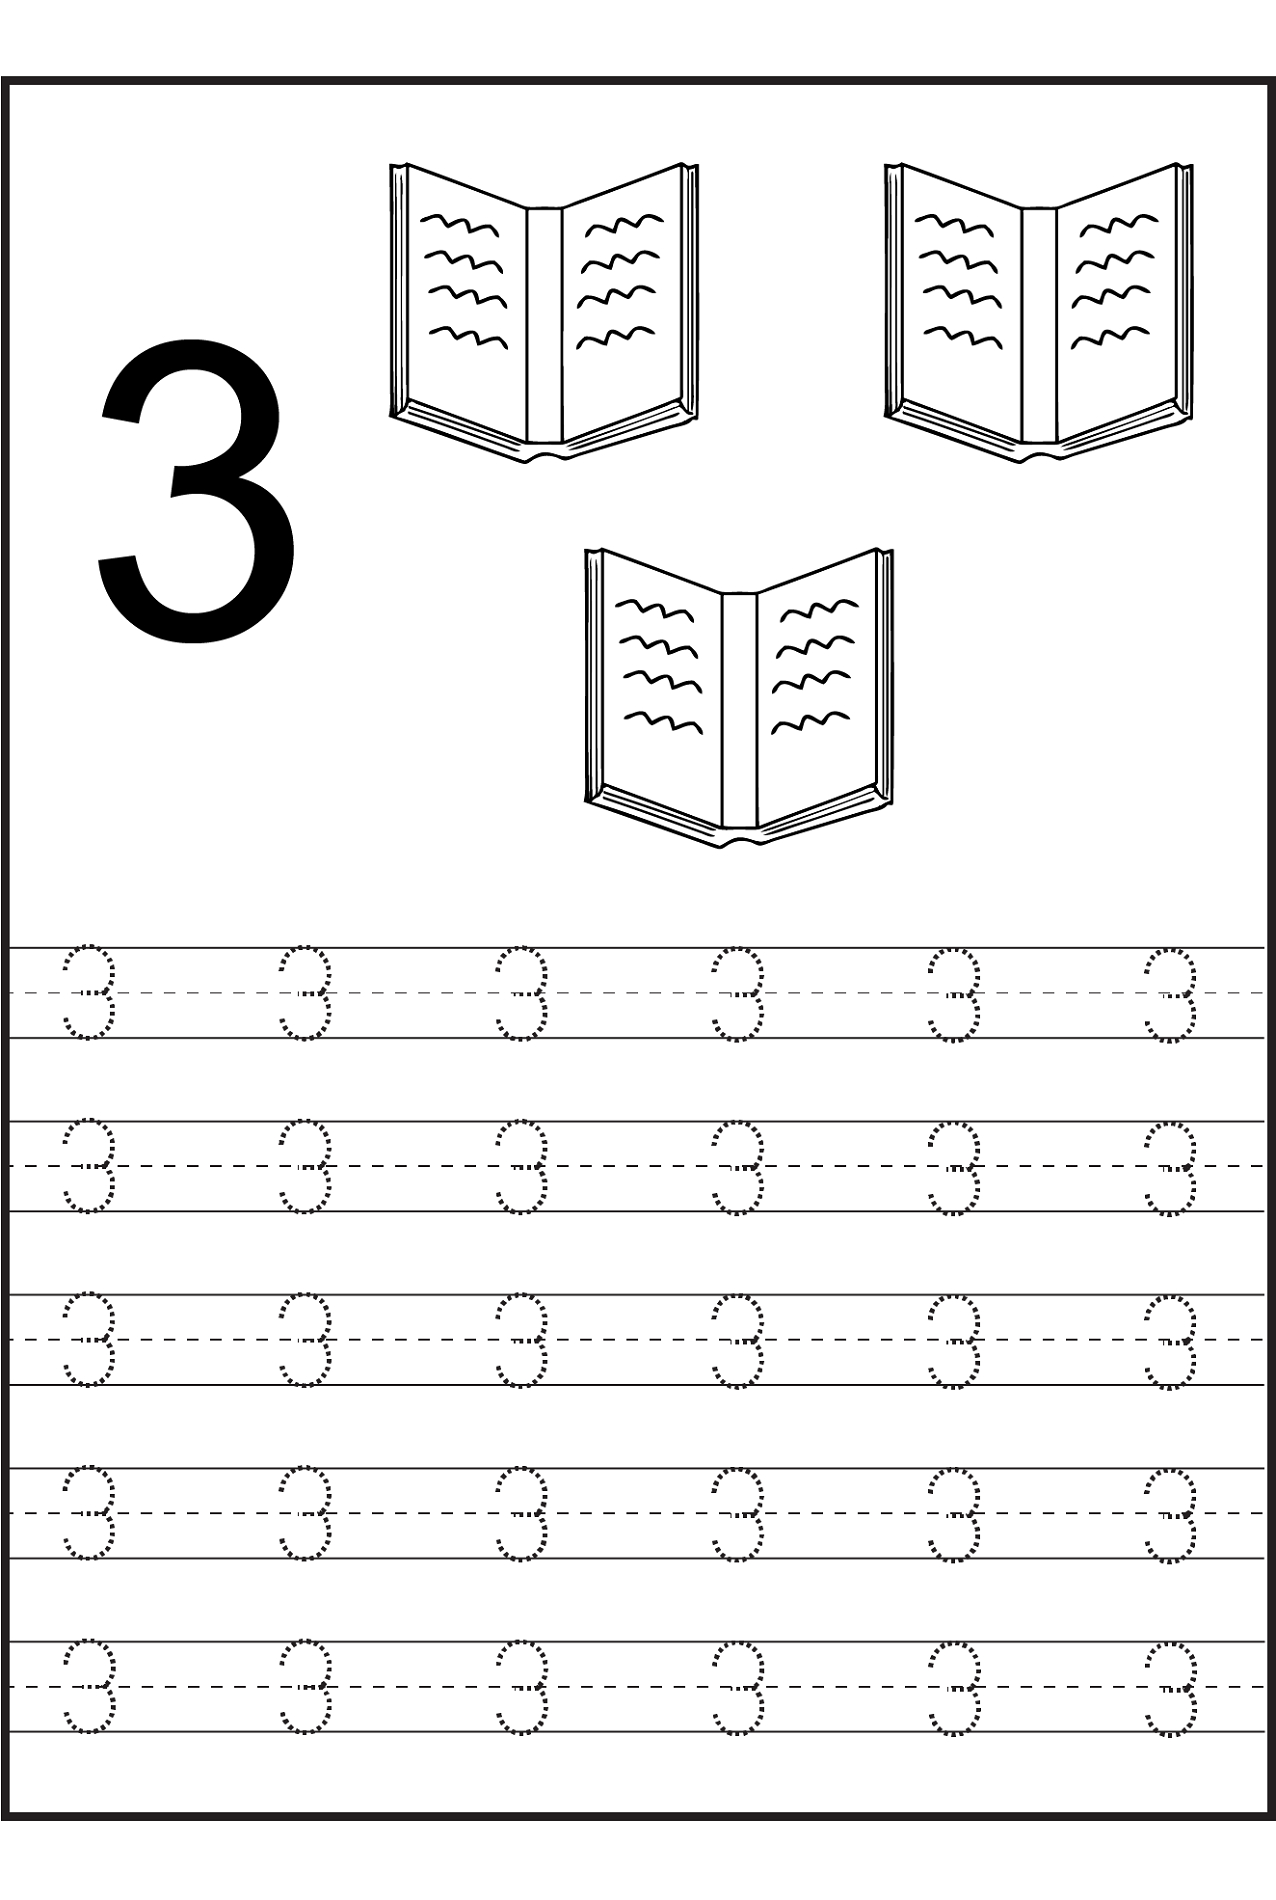 Worksheets For 2 Years Old | Kindergarten Worksheets inside Alphabet Tracing Worksheets For 2 Year Olds